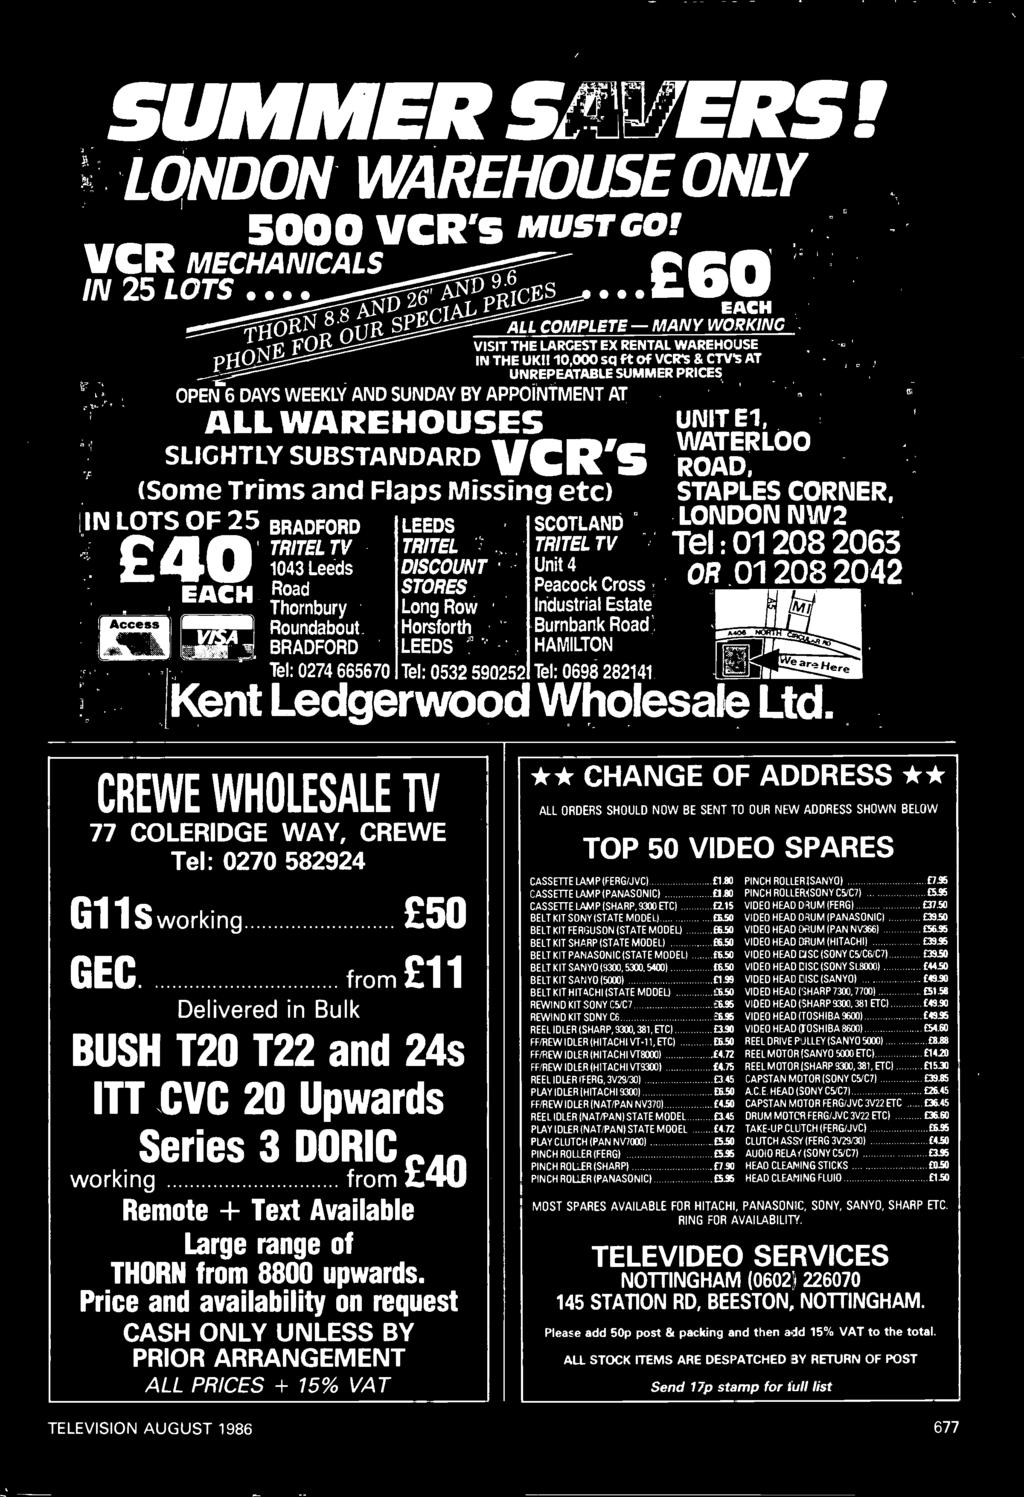 Ledgerwood Wholesale Ltd. 77 COLERIDGE Tel: 0270 TV WAY,CREWE 582924 WHOLESALE Glls working 50 GEC.